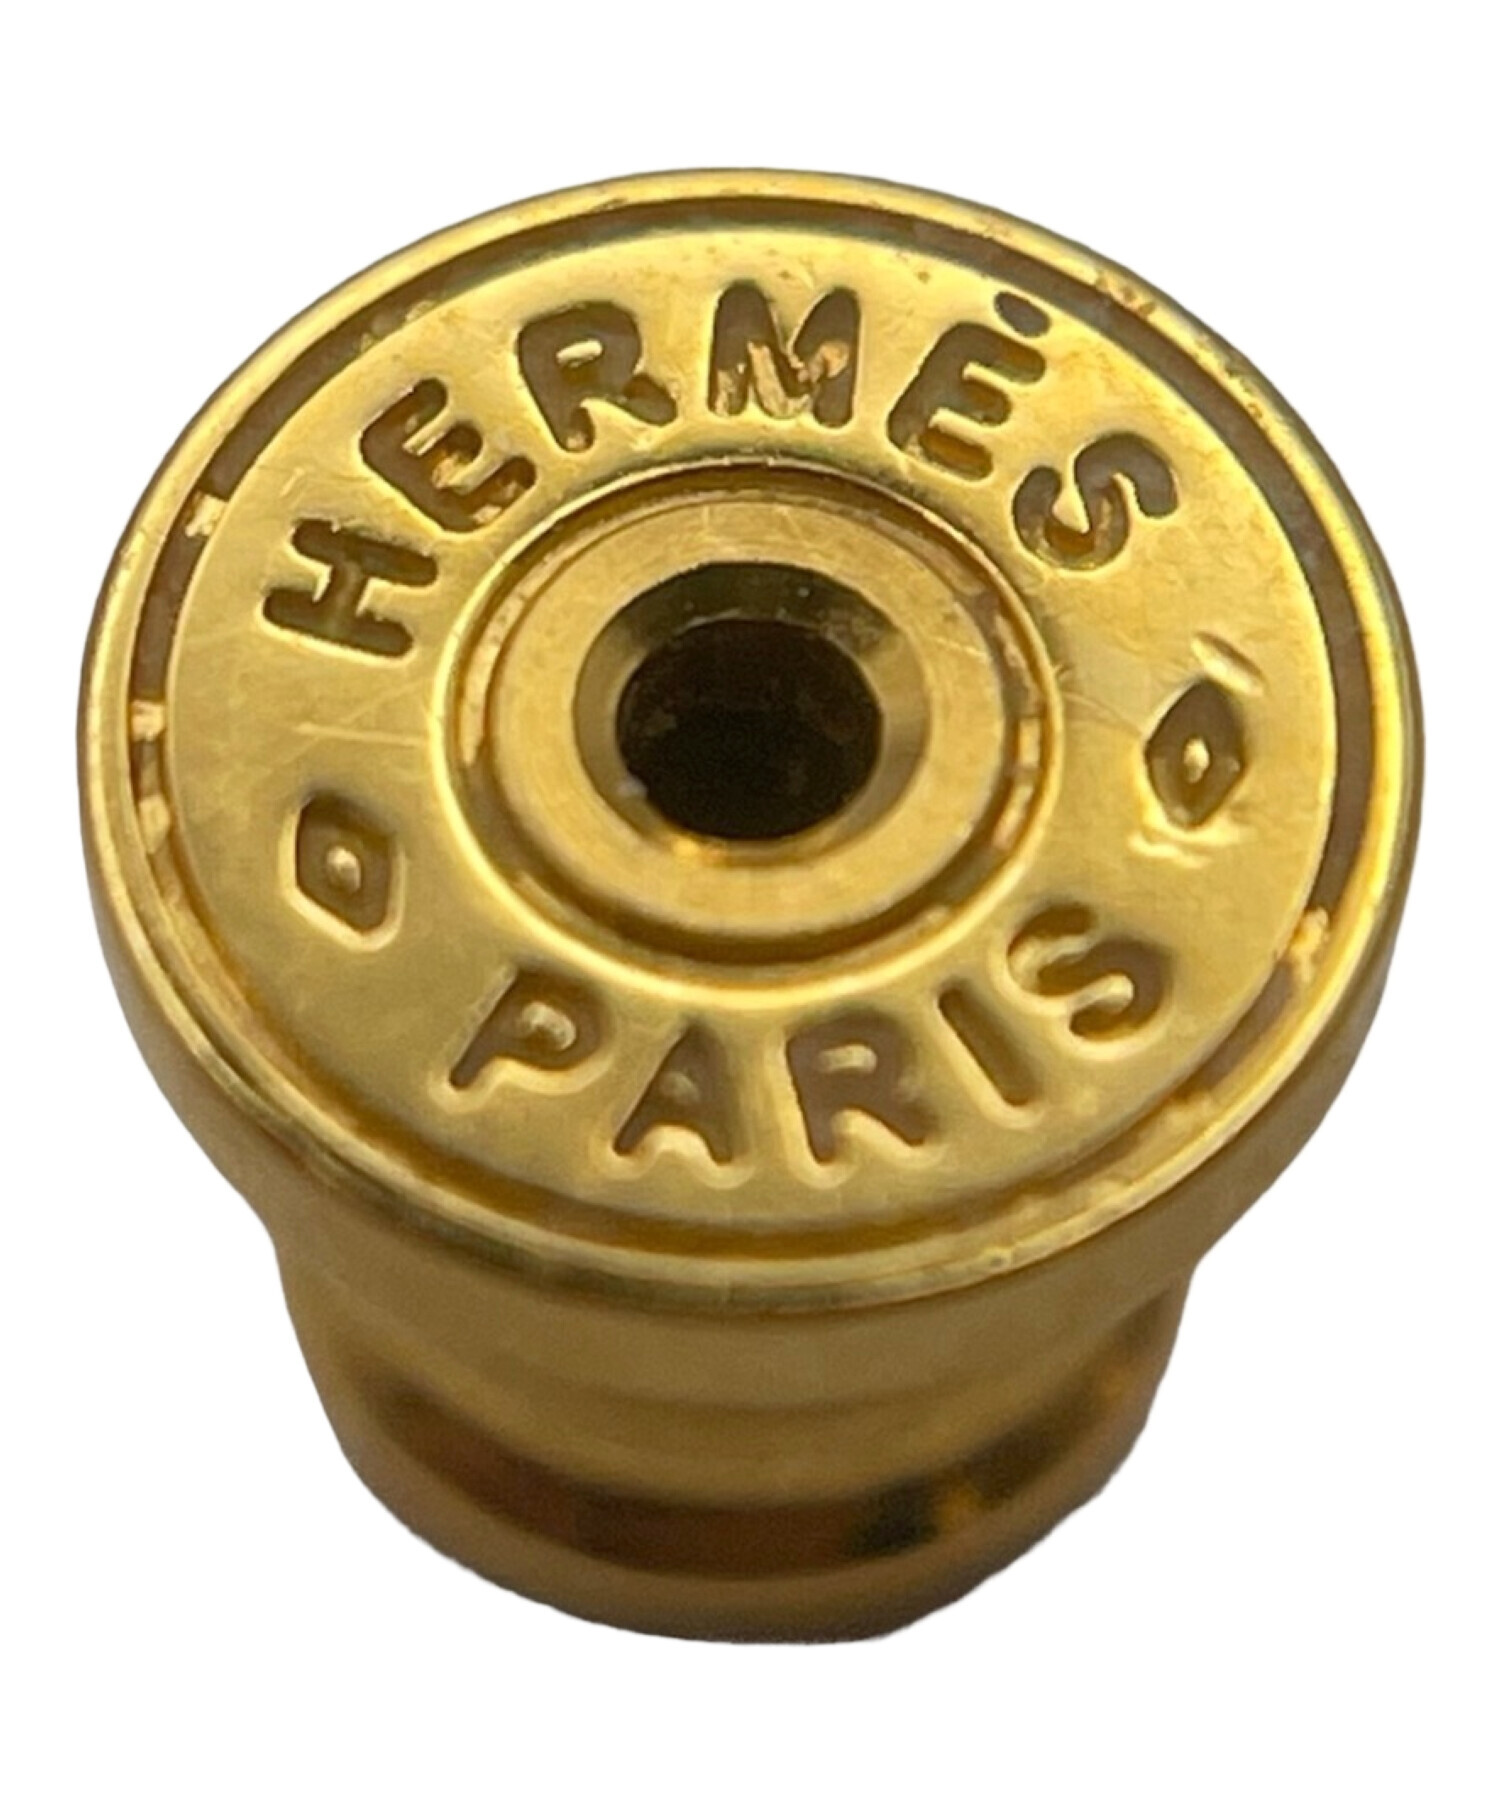 HERMES (エルメス) シャルニエール ピアスPM エトゥープ×ゴールド サイズ:PM 未使用品